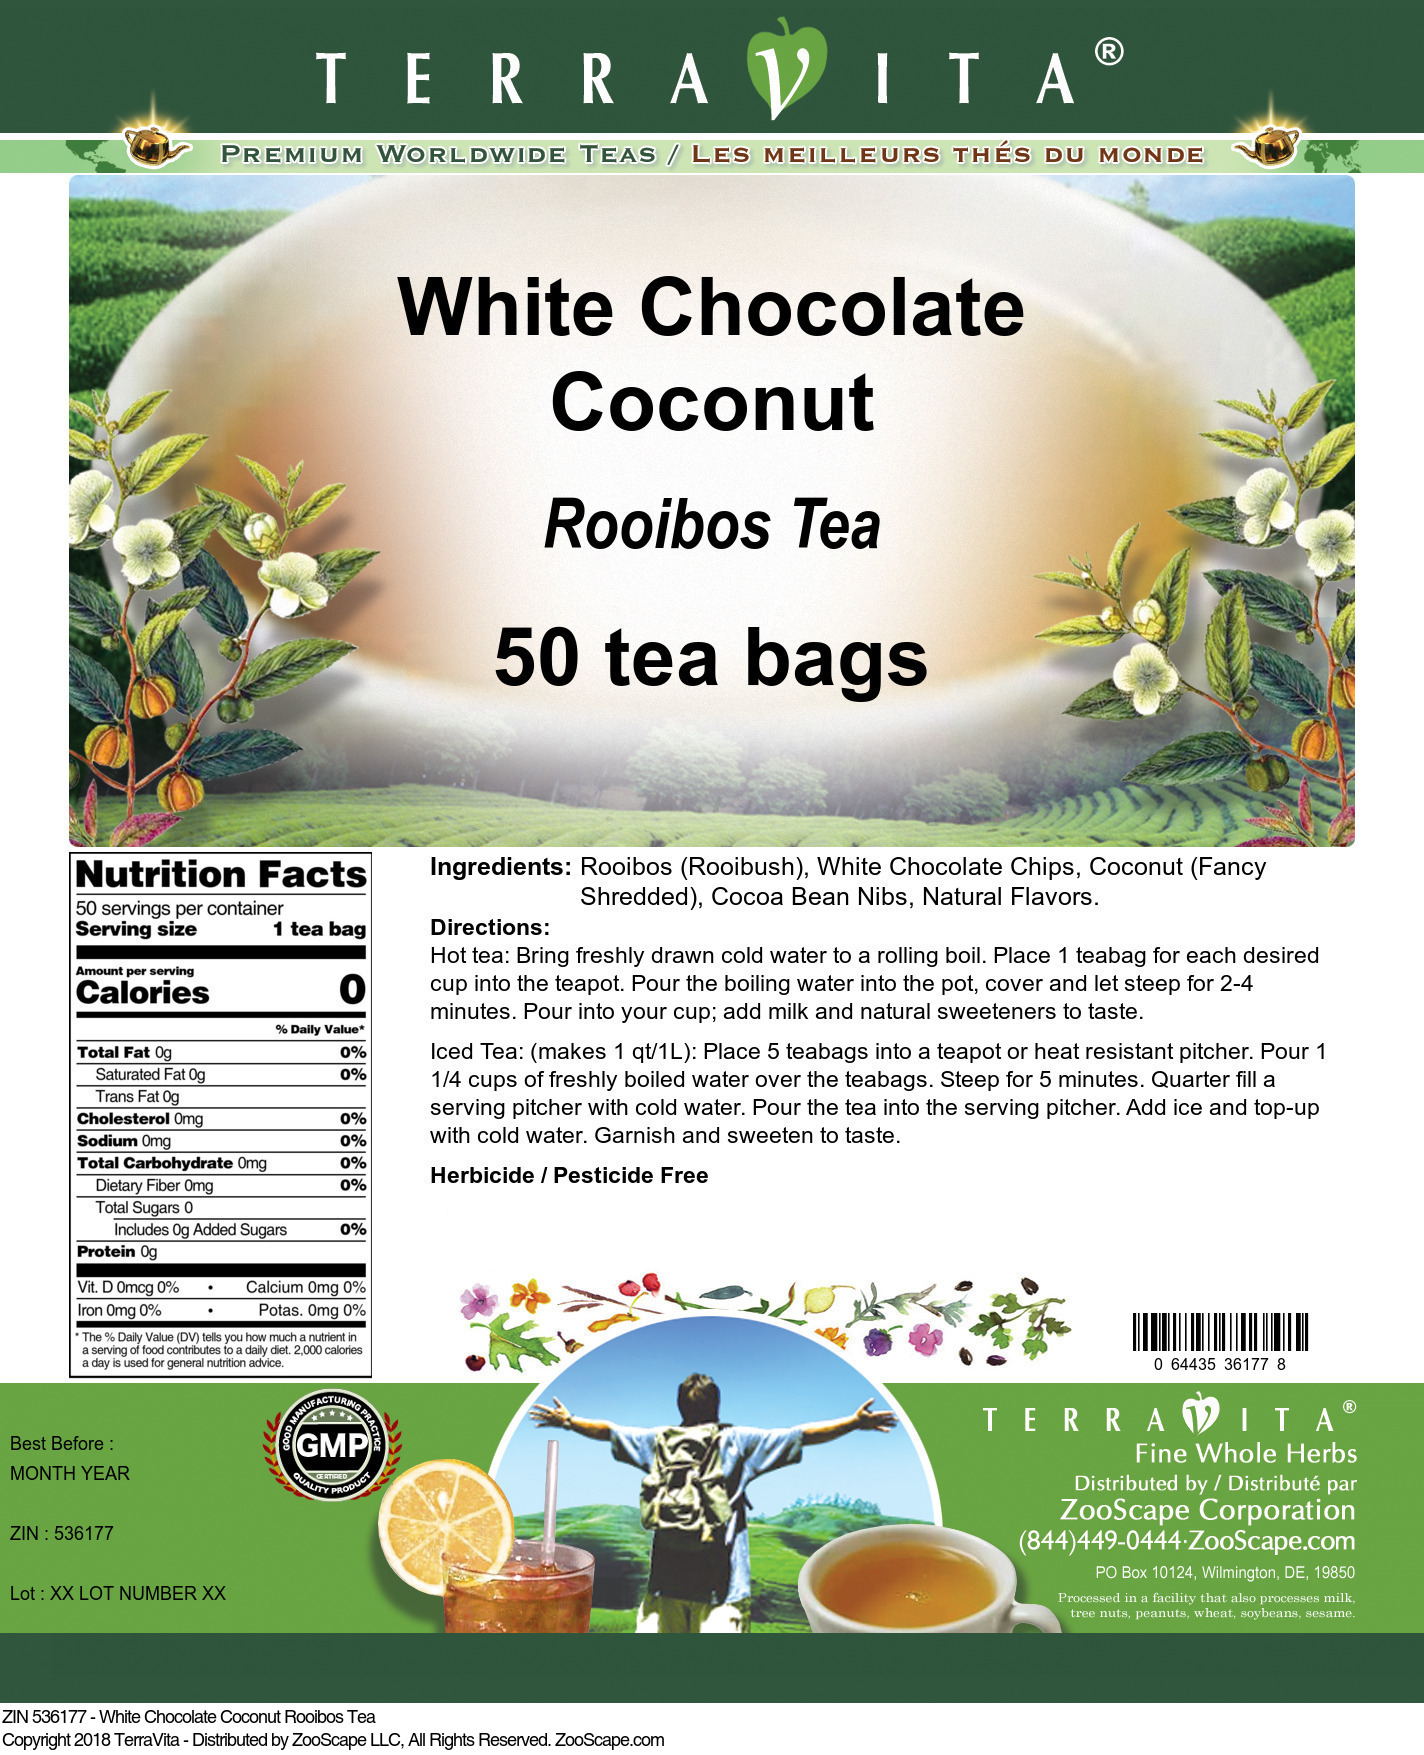 White Chocolate Coconut Rooibos Tea - Label